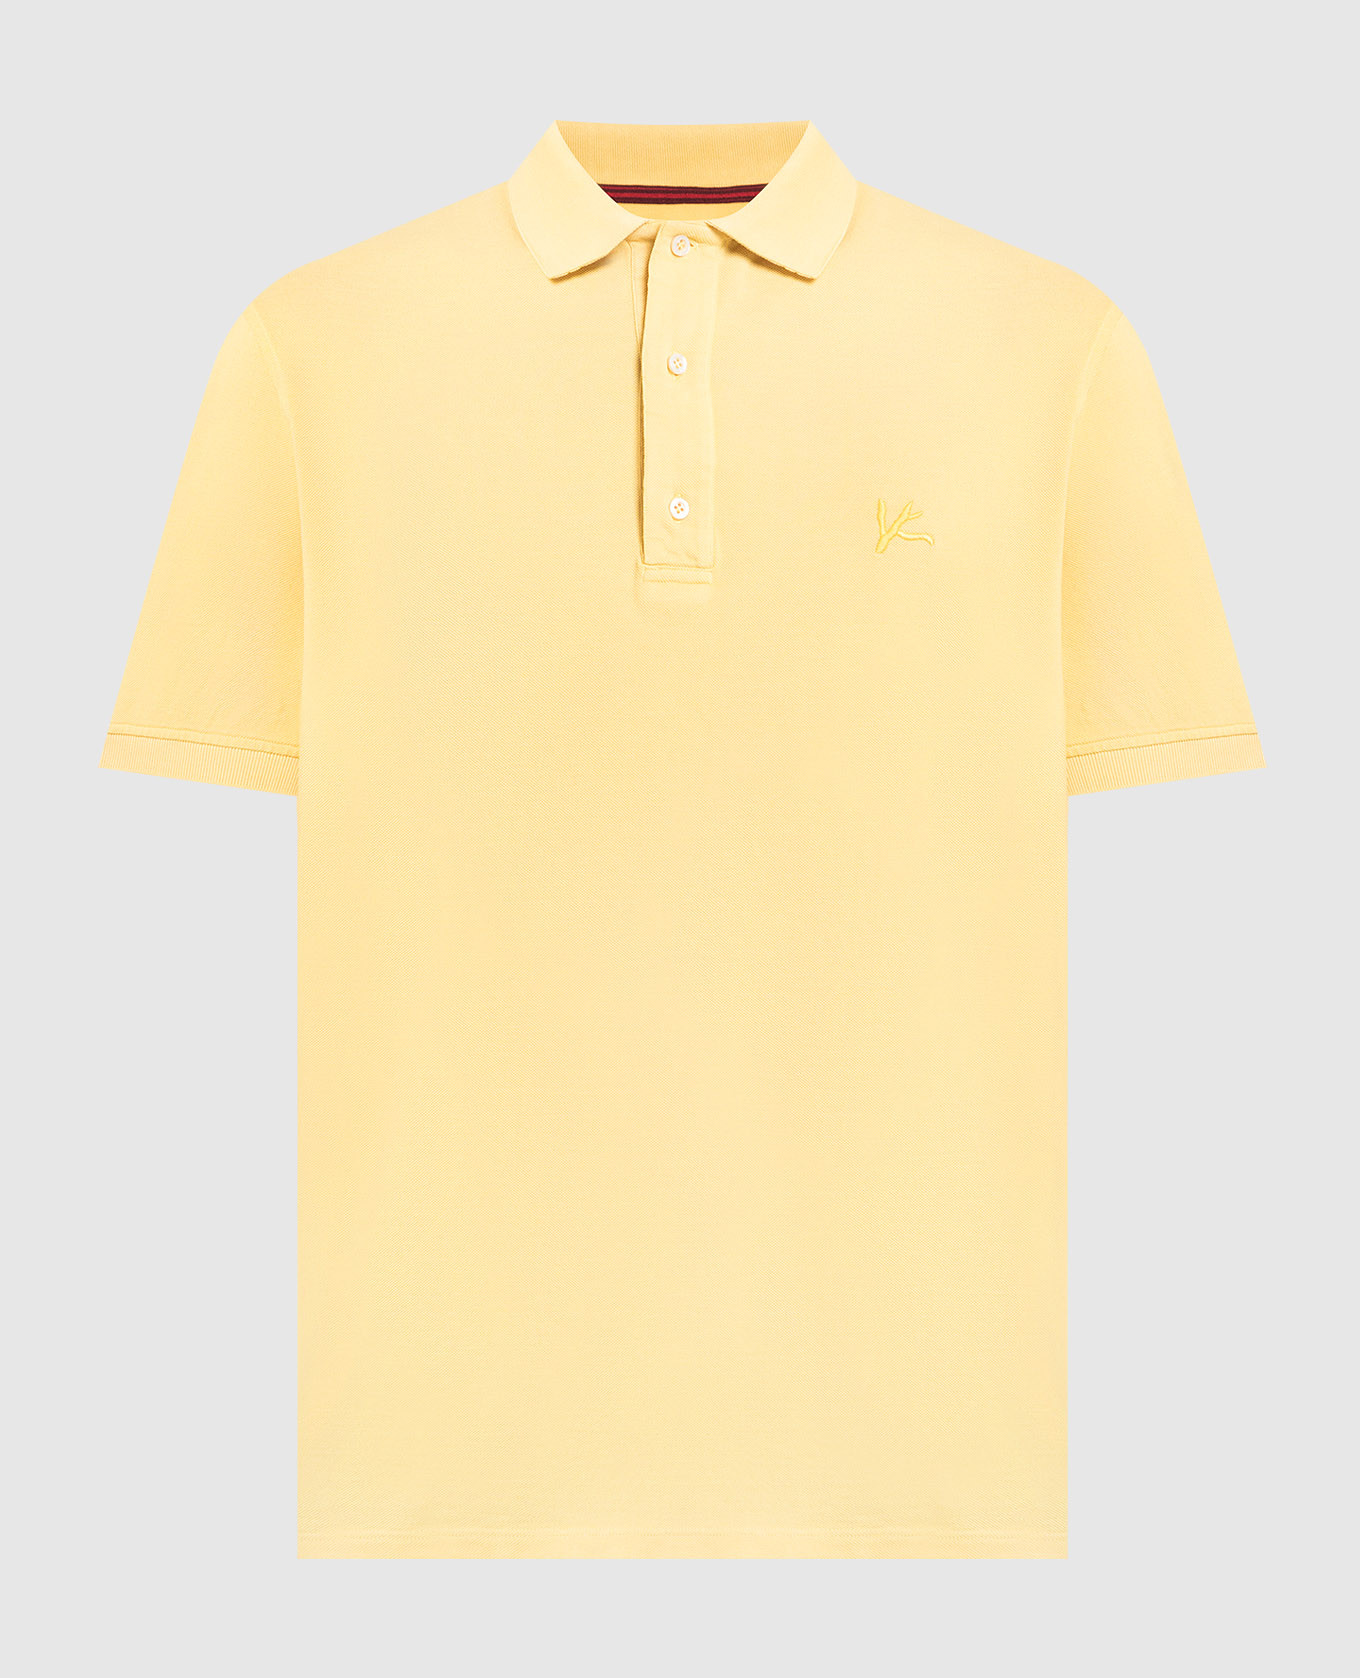 Yellow polo shirt with logo